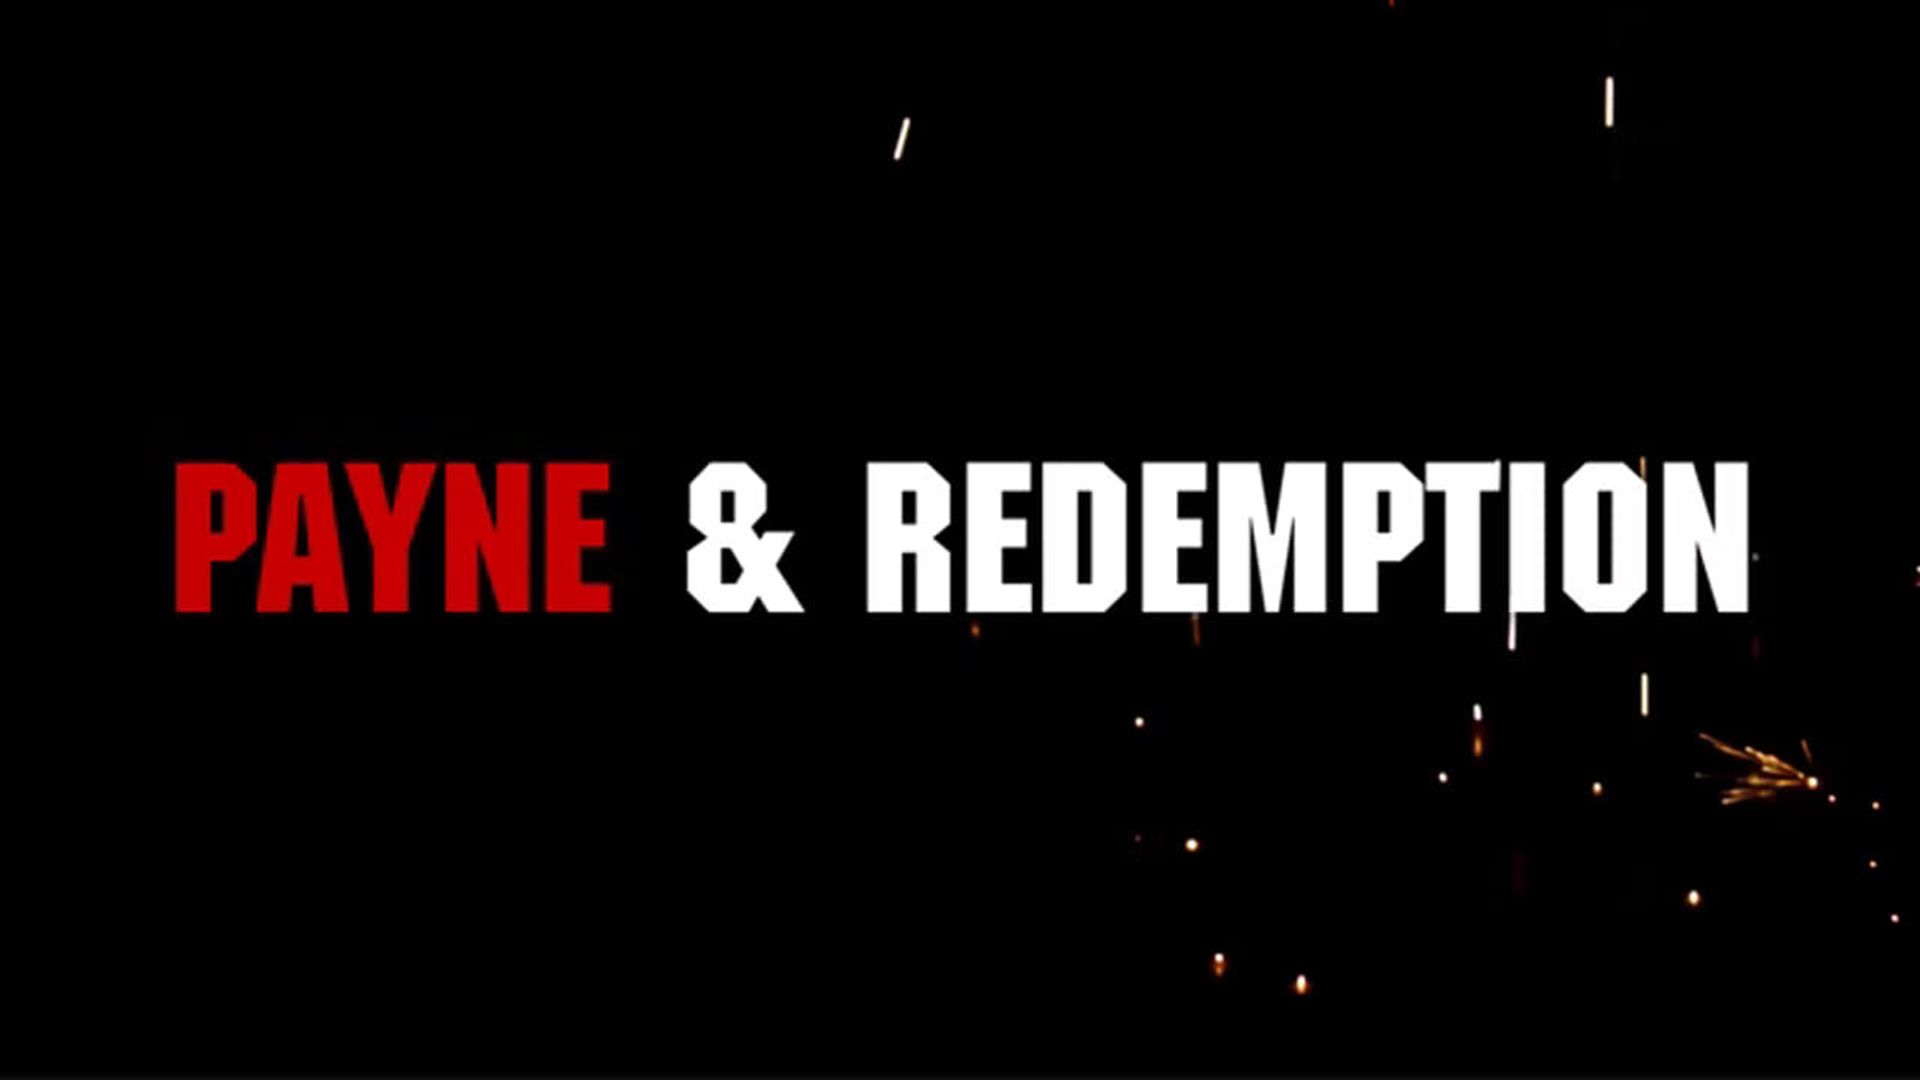 Payne & Redemption background